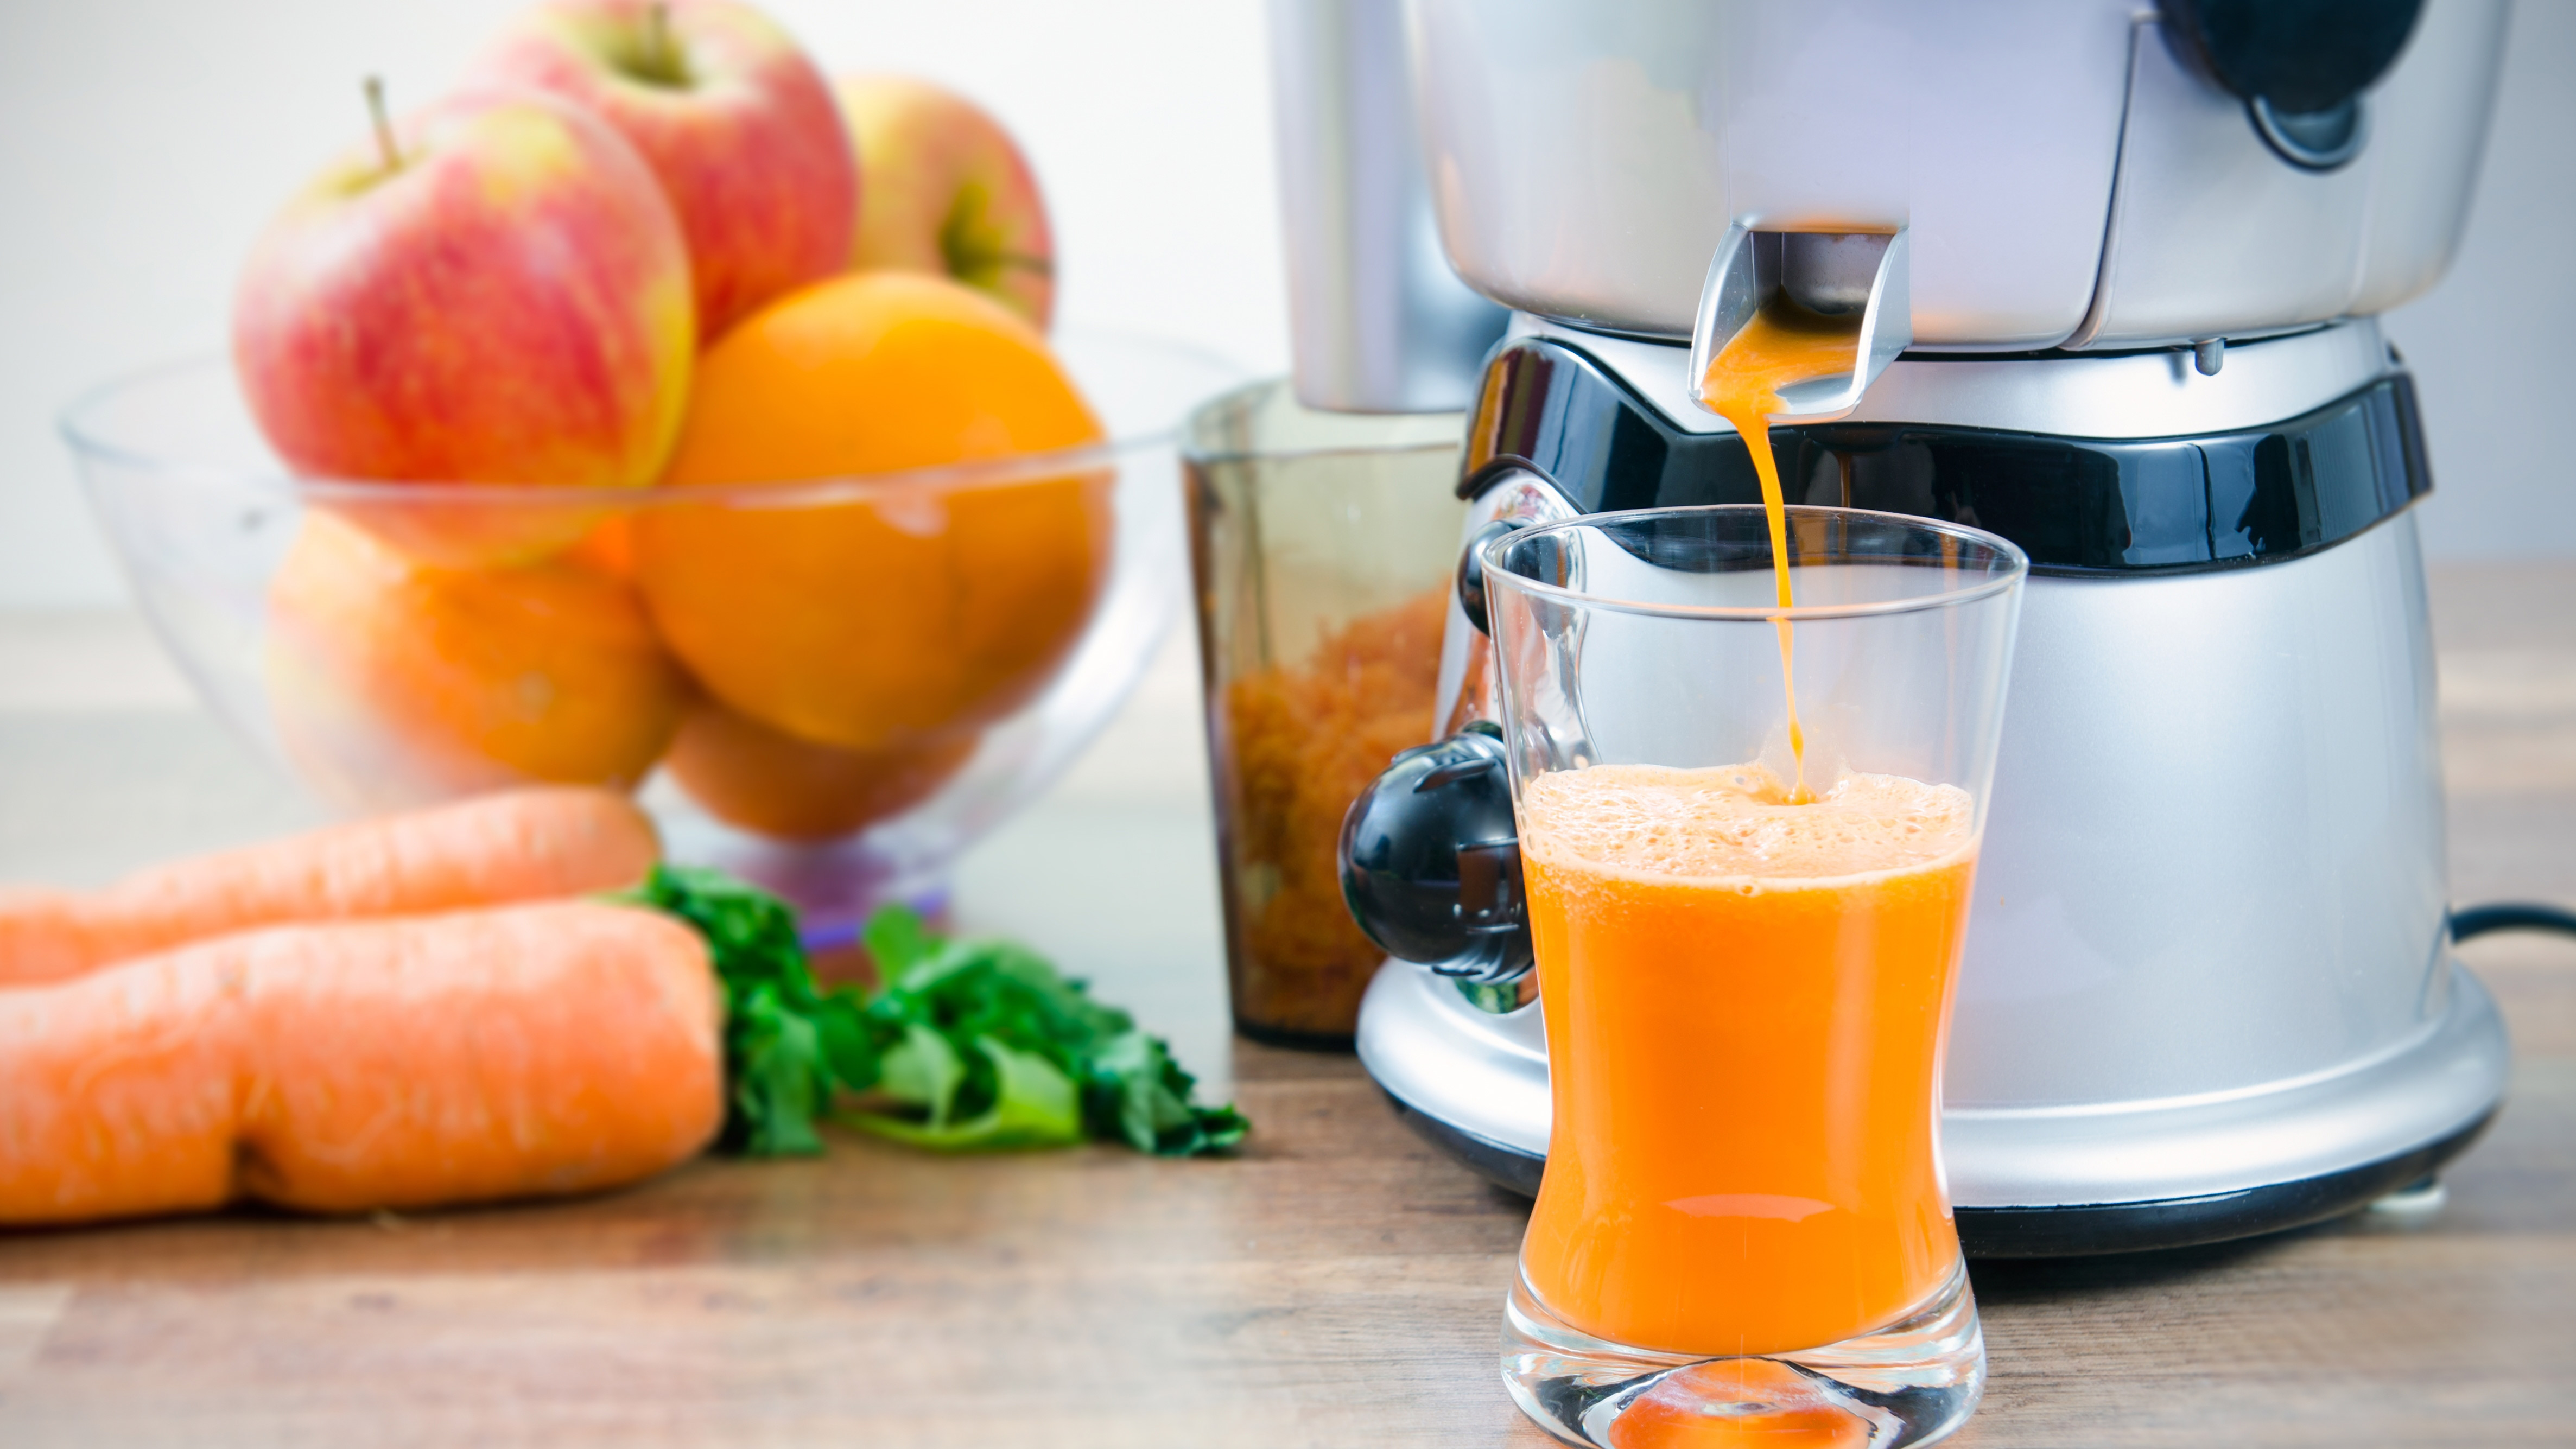 Juicer digunakan untuk membuat jus jeruk dan dikelilingi oleh buah